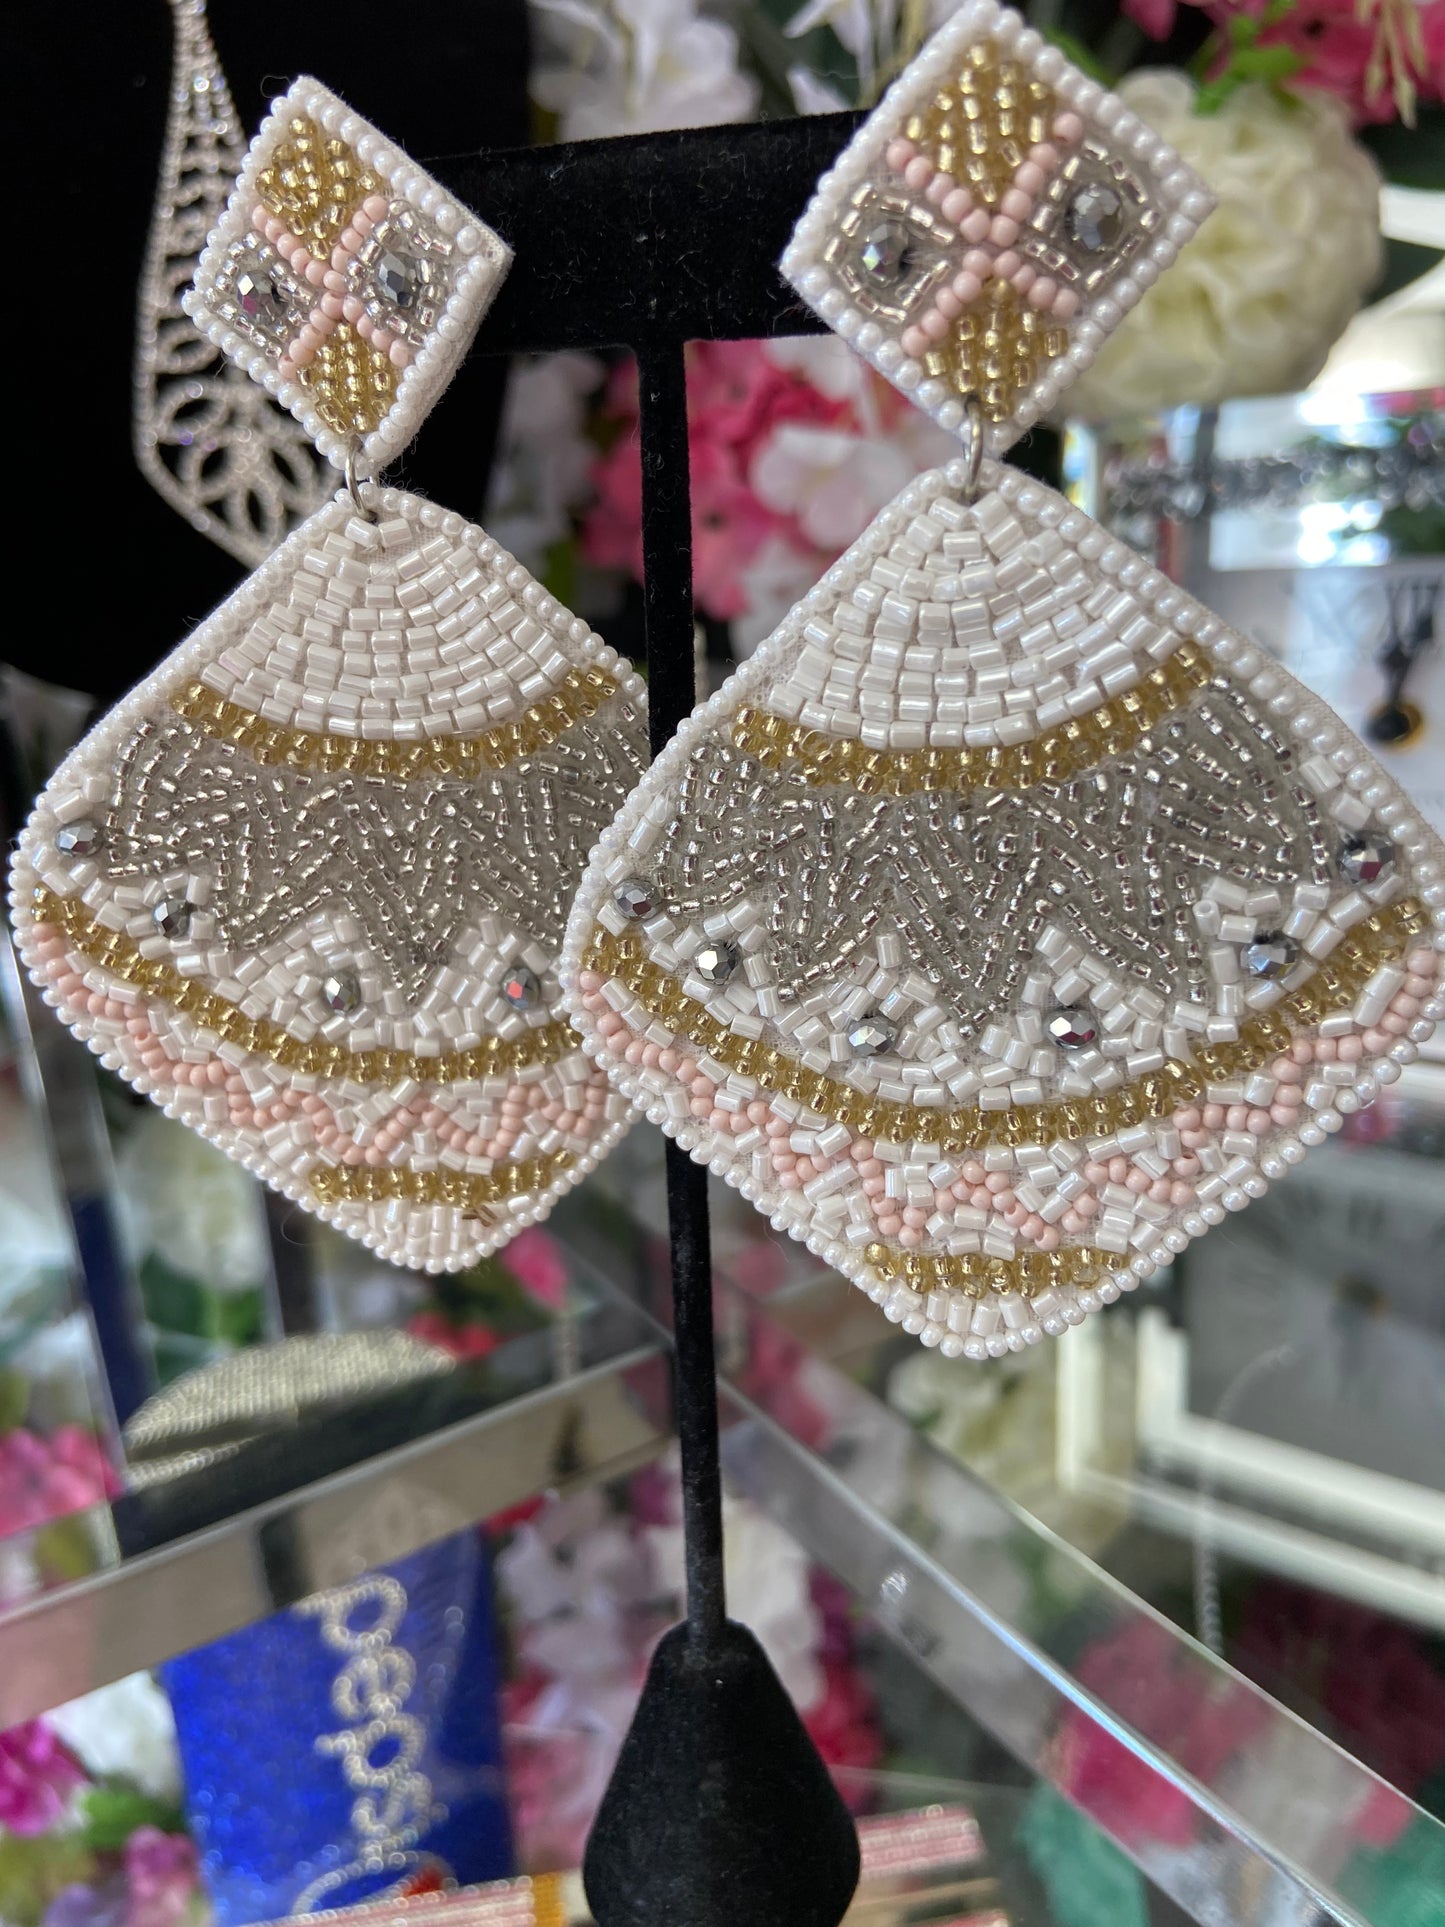 Beaded Diamond Earrings